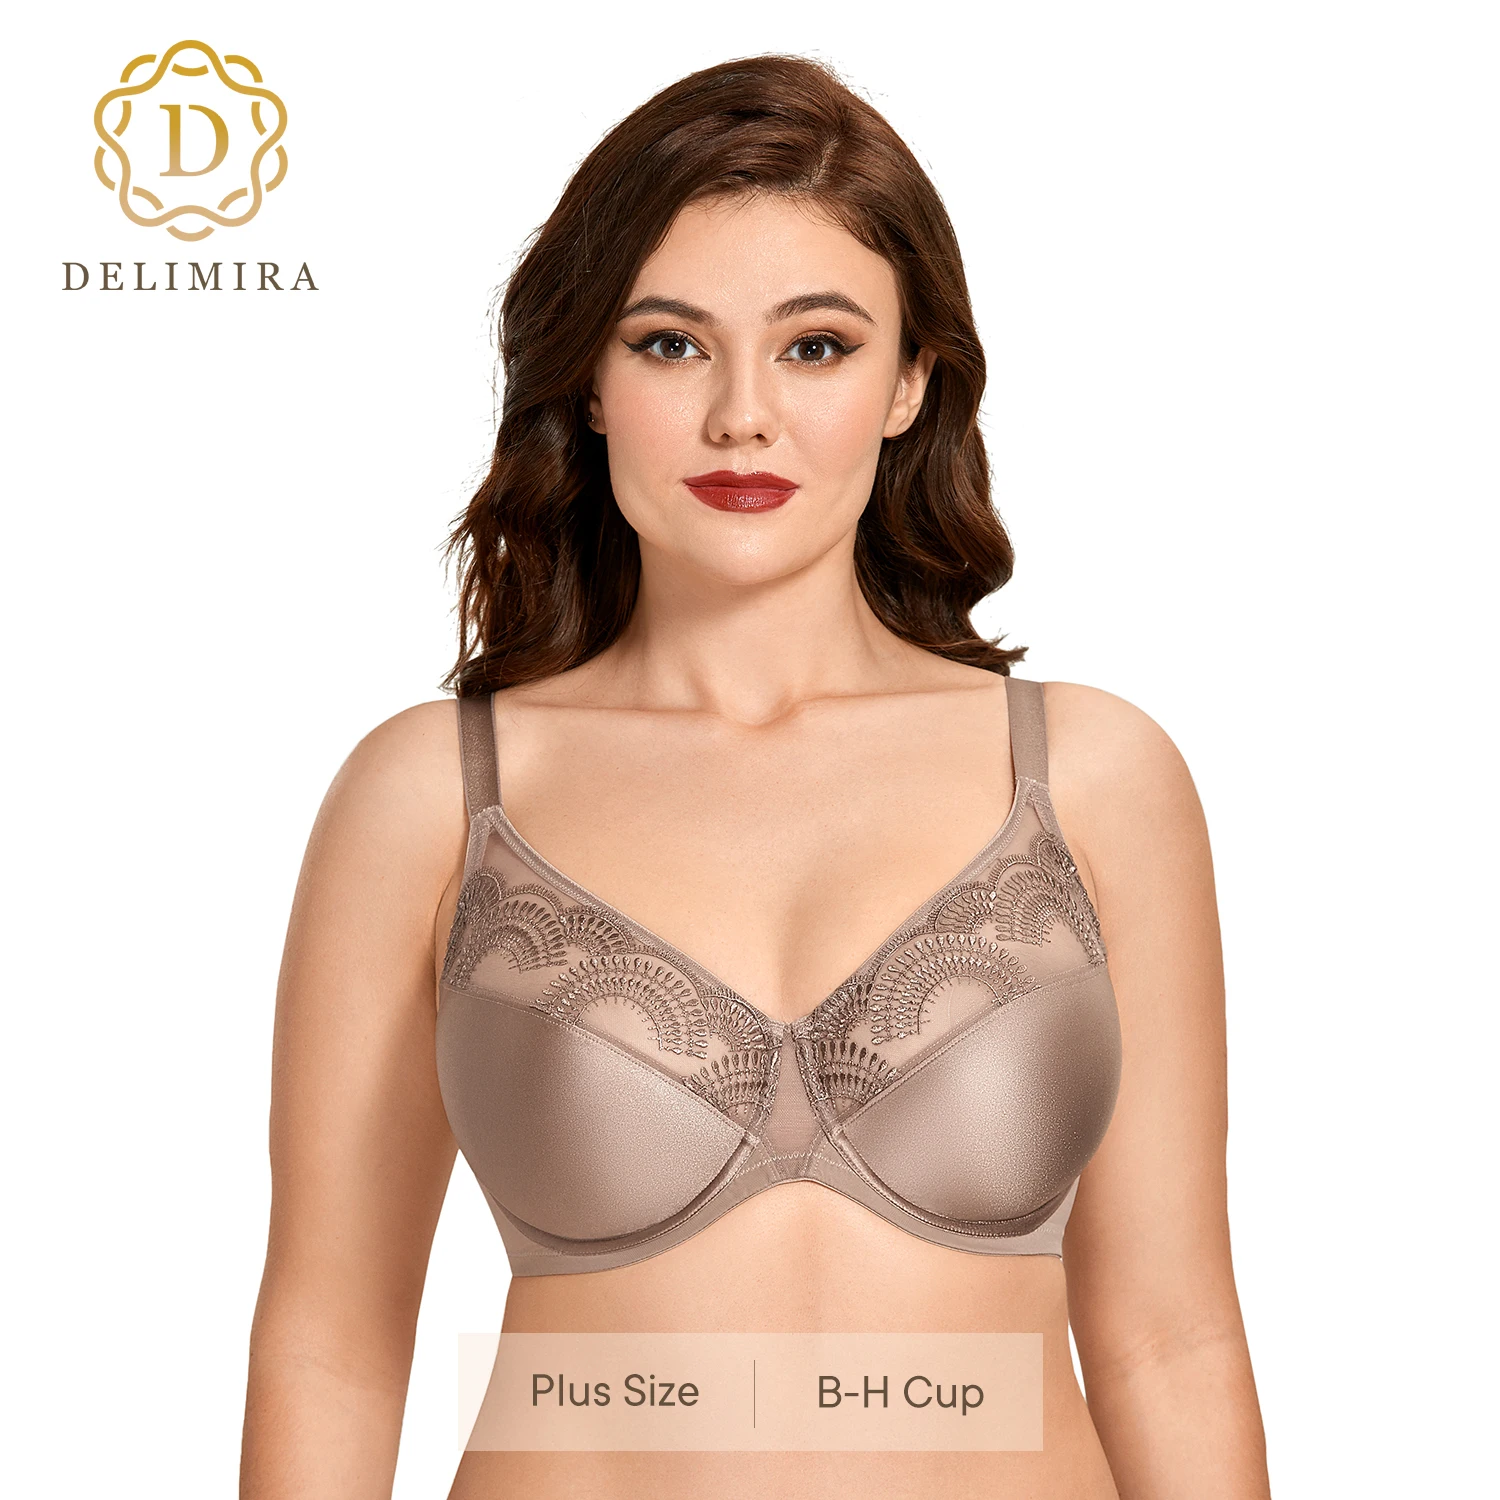 Delimira Women's Minimizer Bra Plus Size Lace Floral Full Coverage